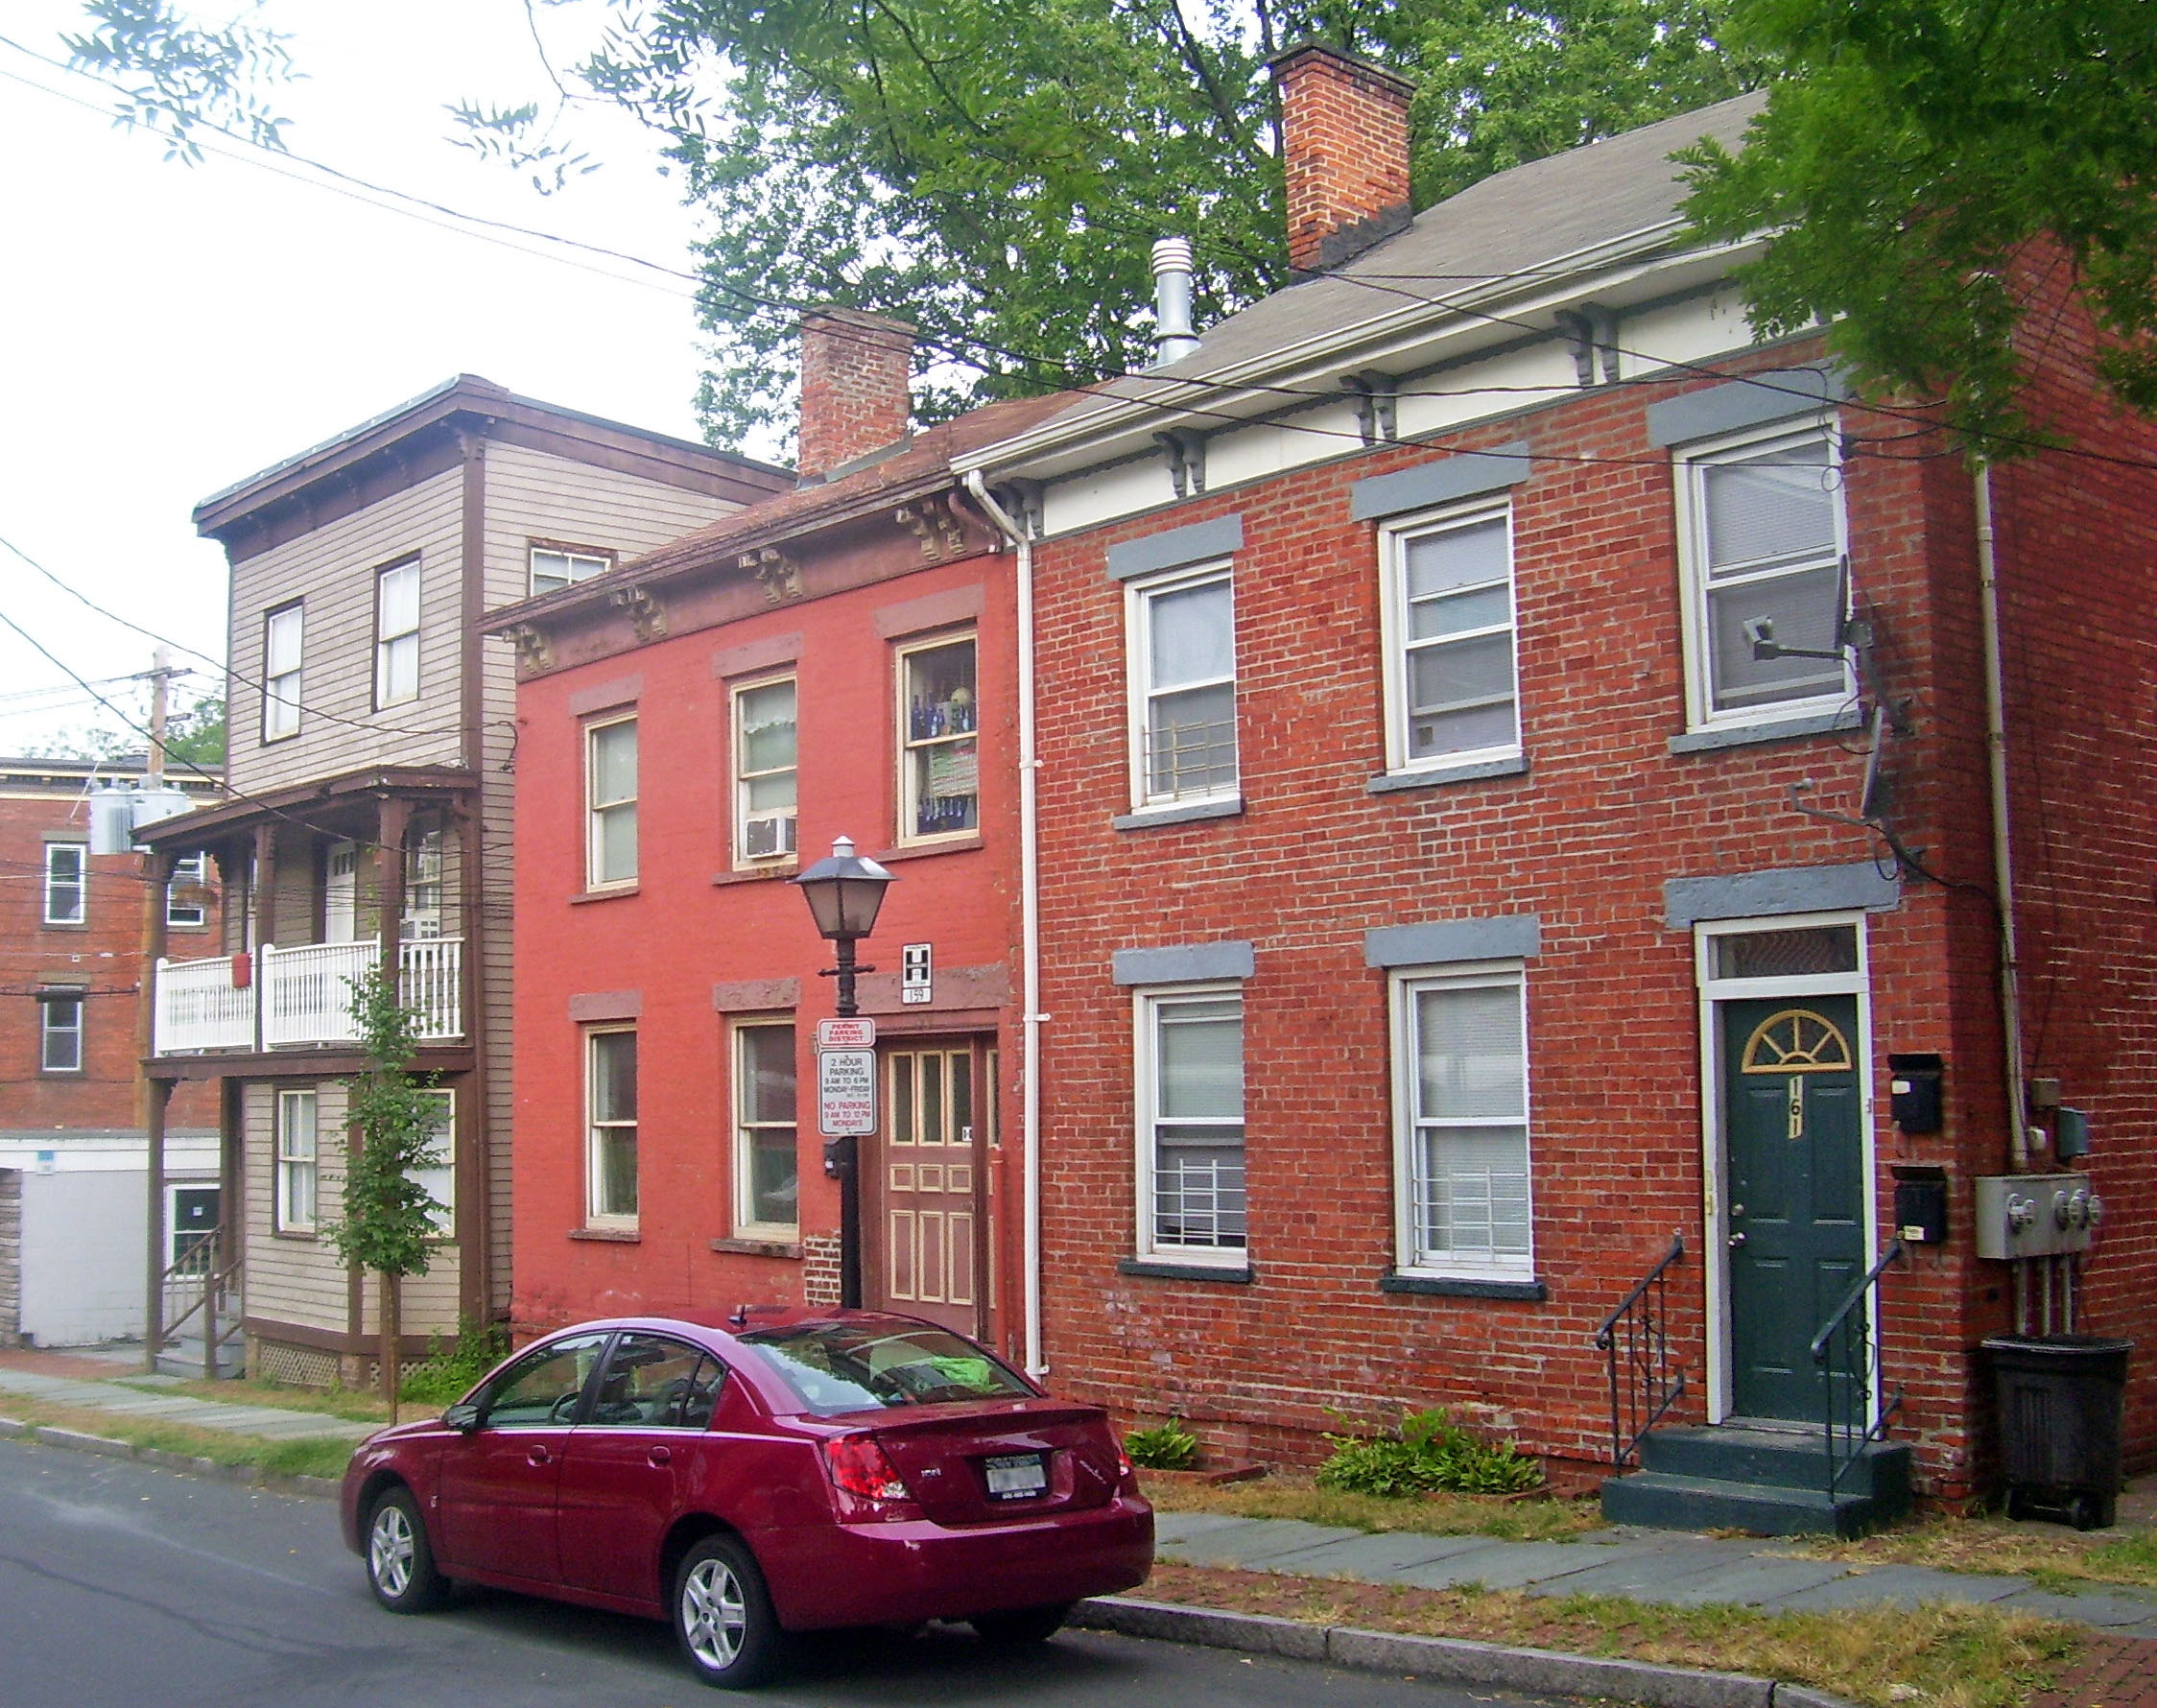 union street historic district